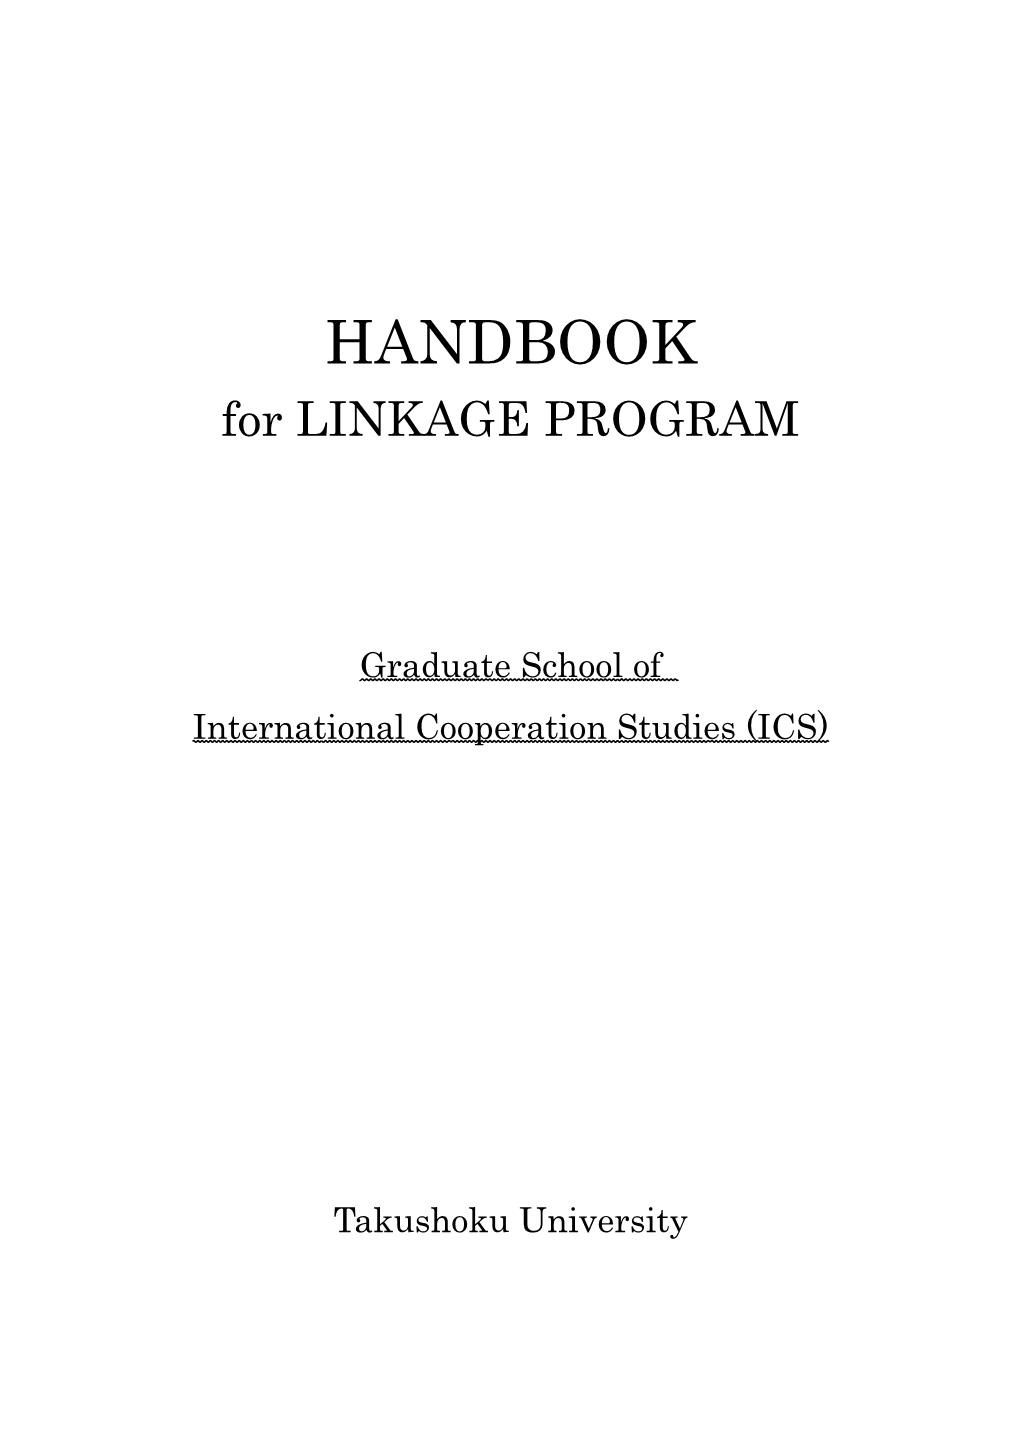 HANDBOOK for LINKAGE PROGRAM